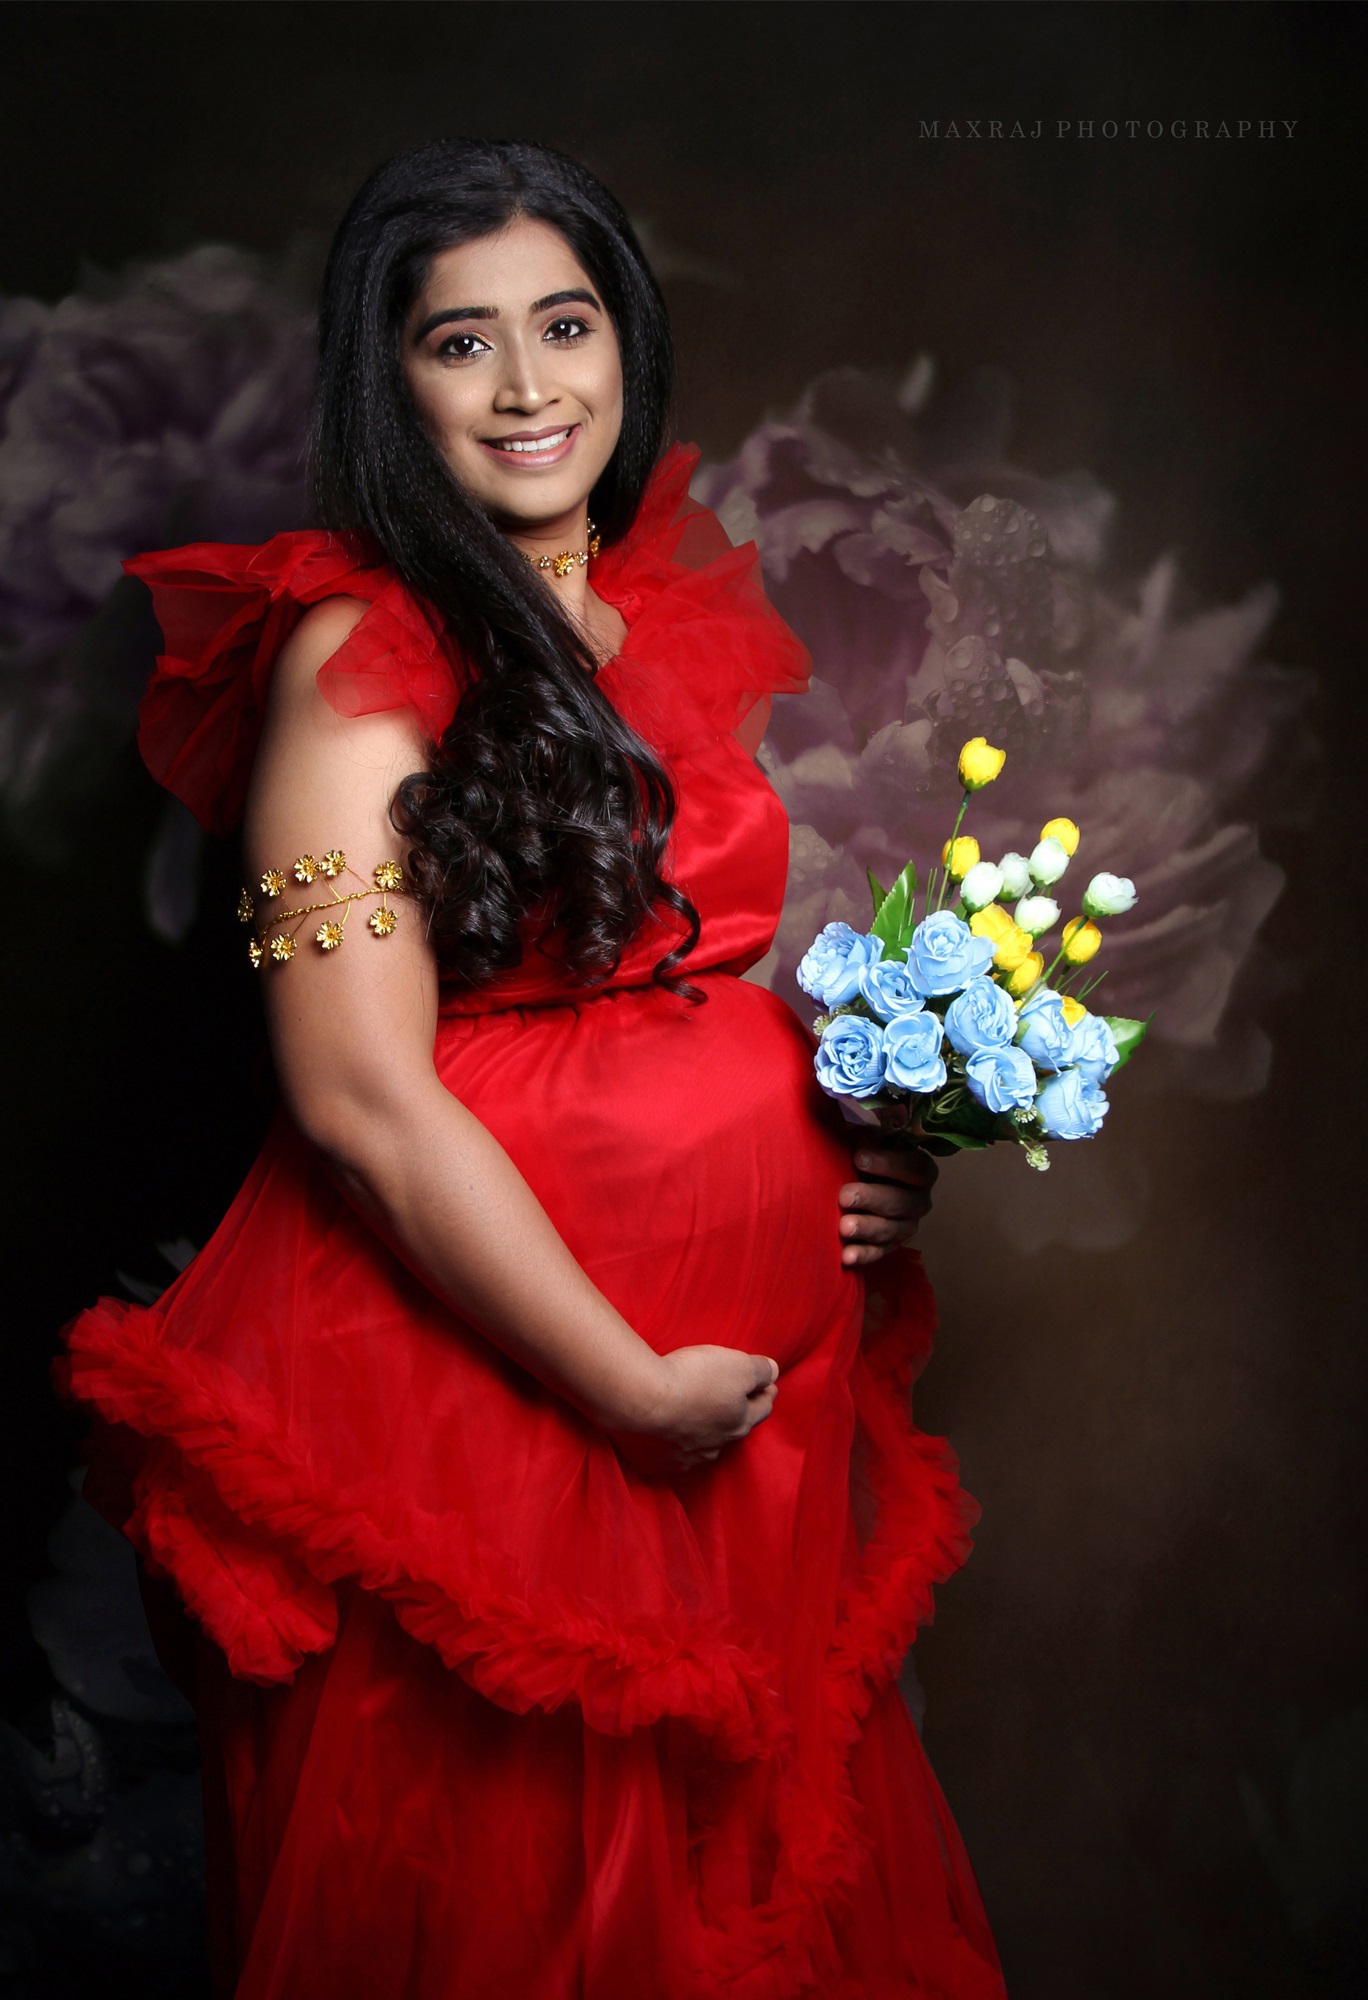 best indoor maternity photographer in pune, pregnancy photoshoot ideas